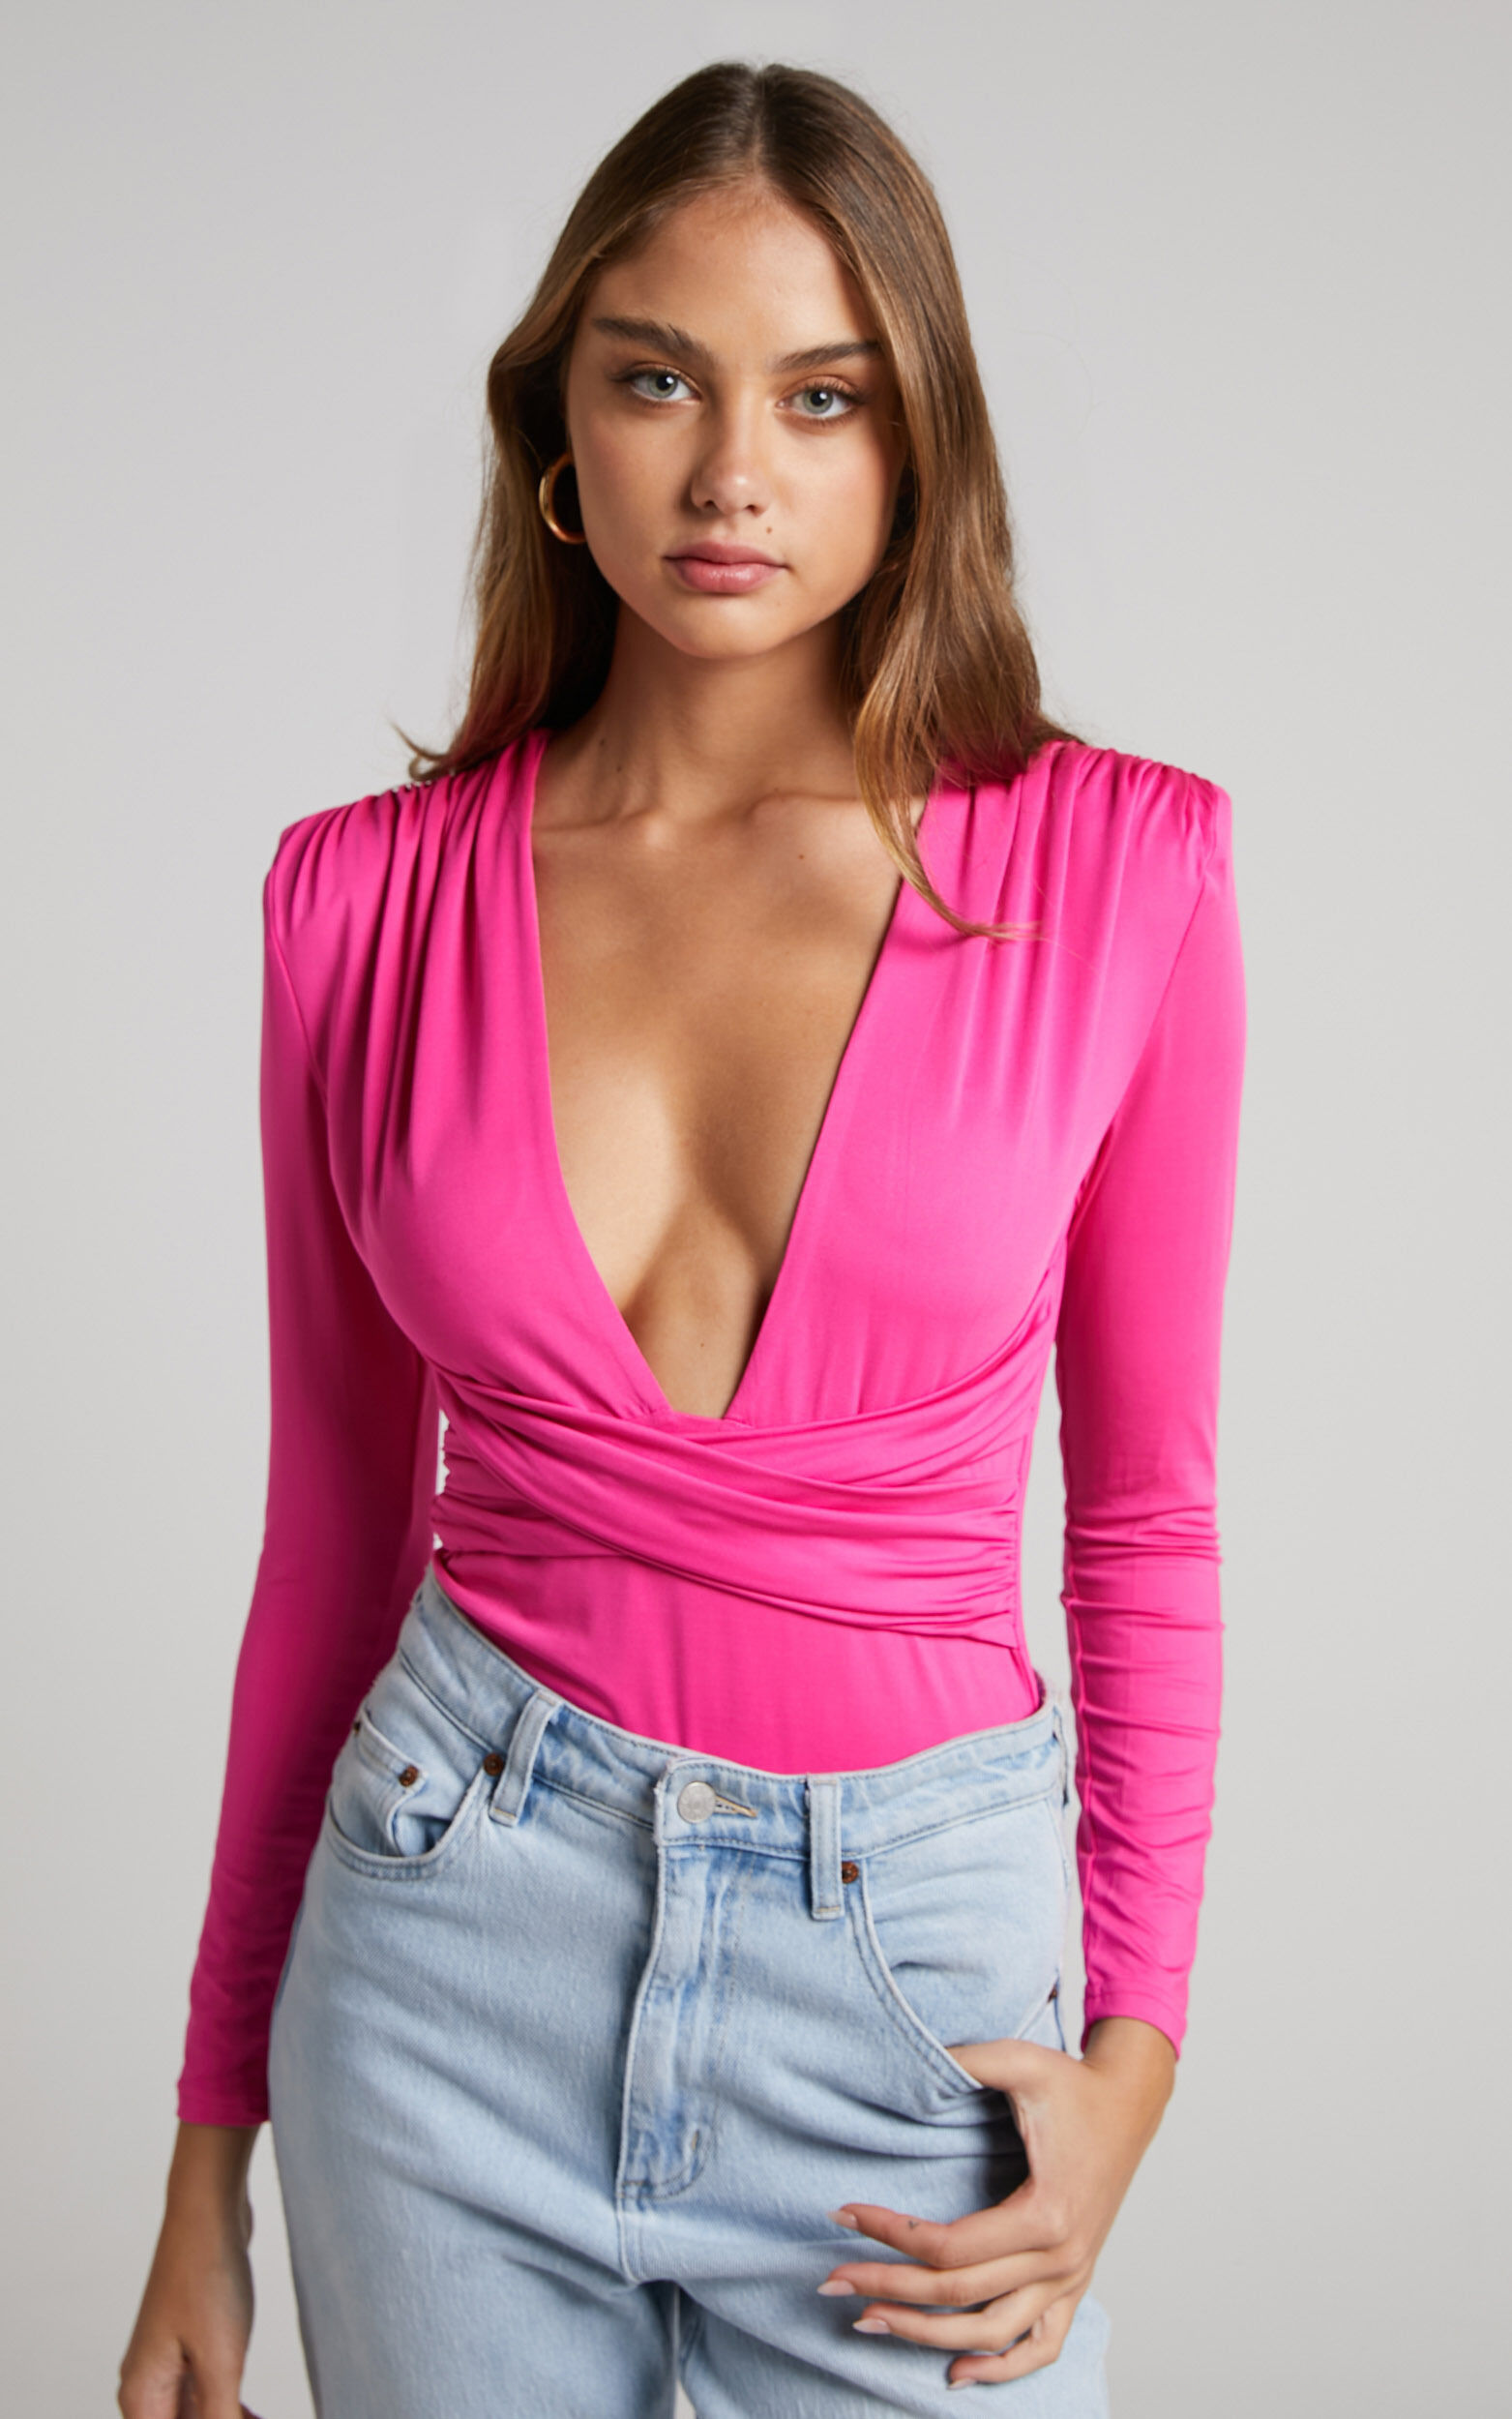 Jairlee Bodysuit - Plunge Neck Faux Wrap Front Bodysuit in Hot Pink - 04, PNK1